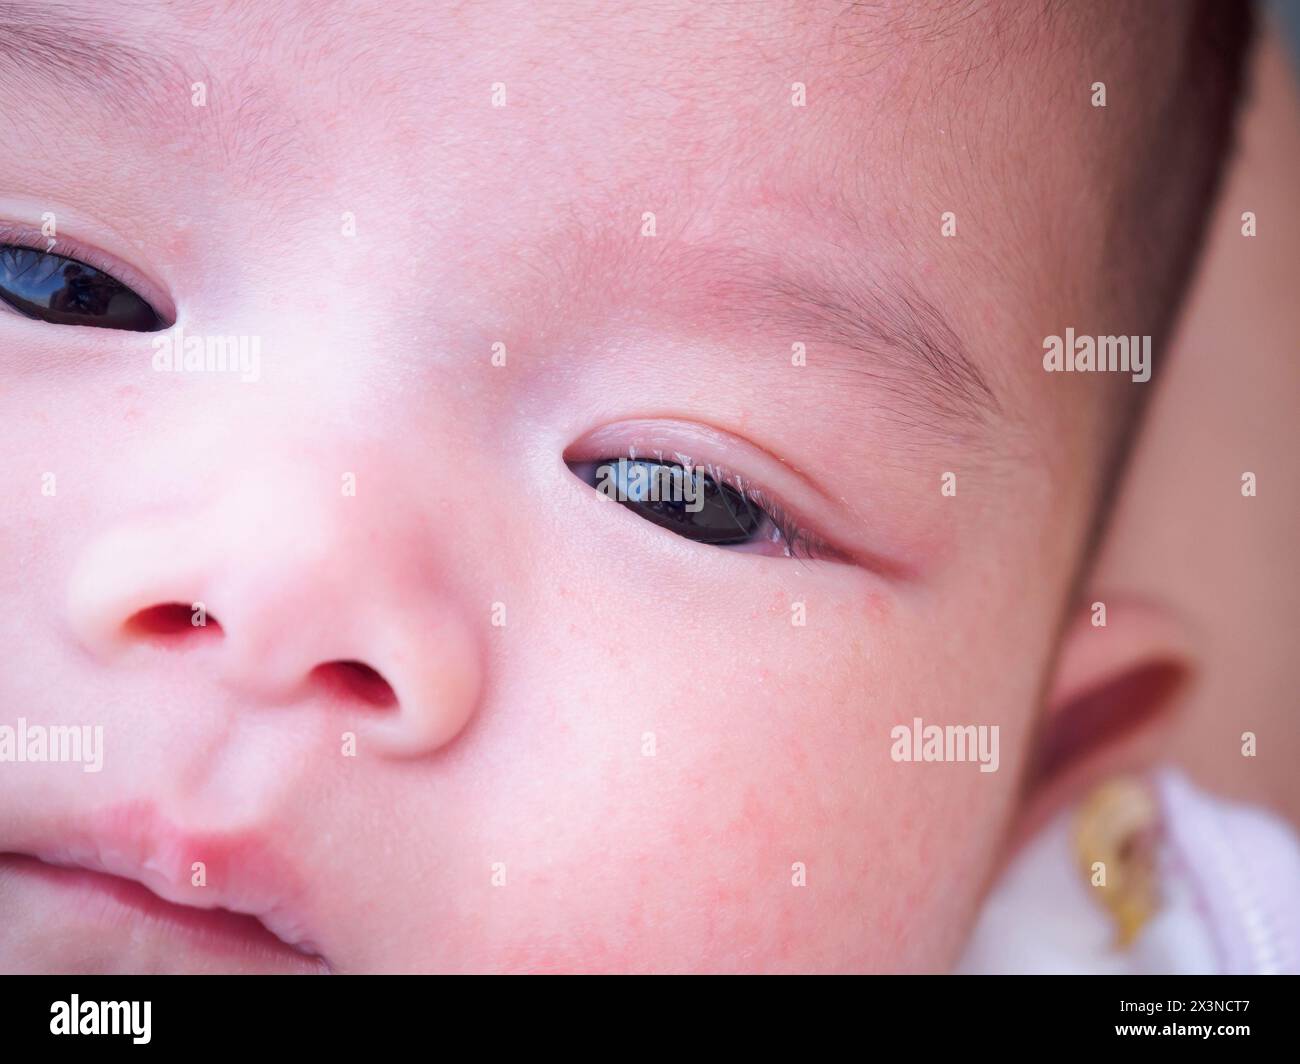 newborn baby with dermatitis allergy on face Stock Photo